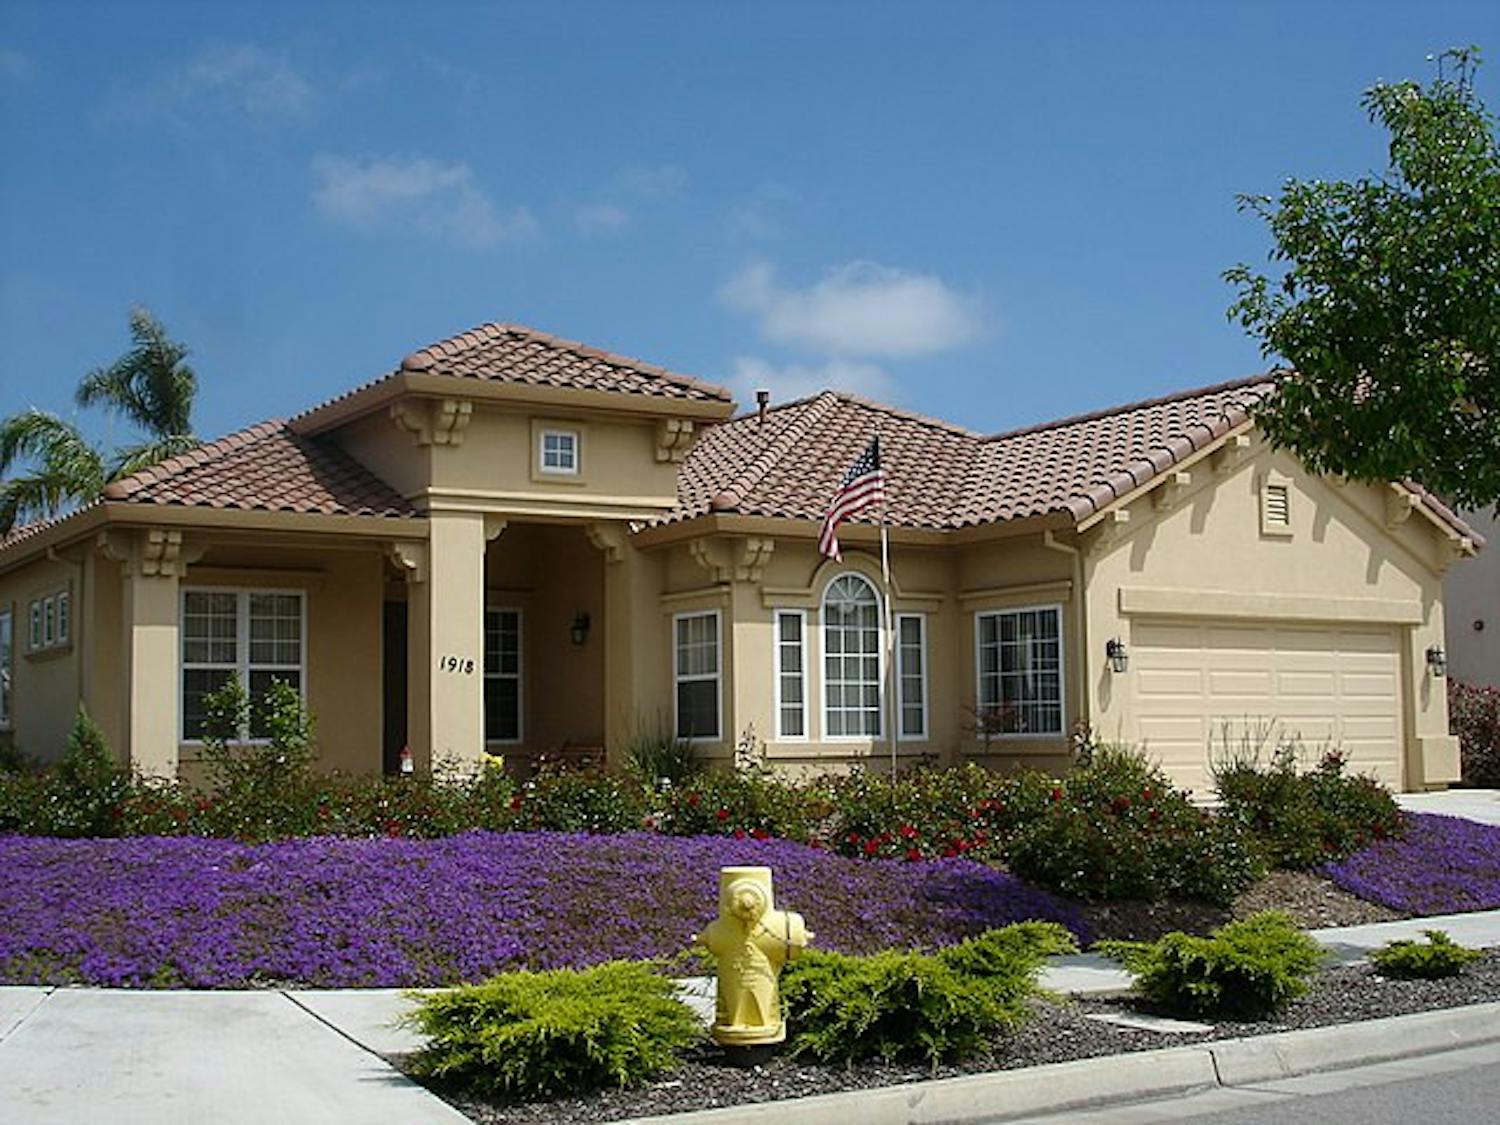 Ranch_style_home_in_Salinas,_California.jpeg